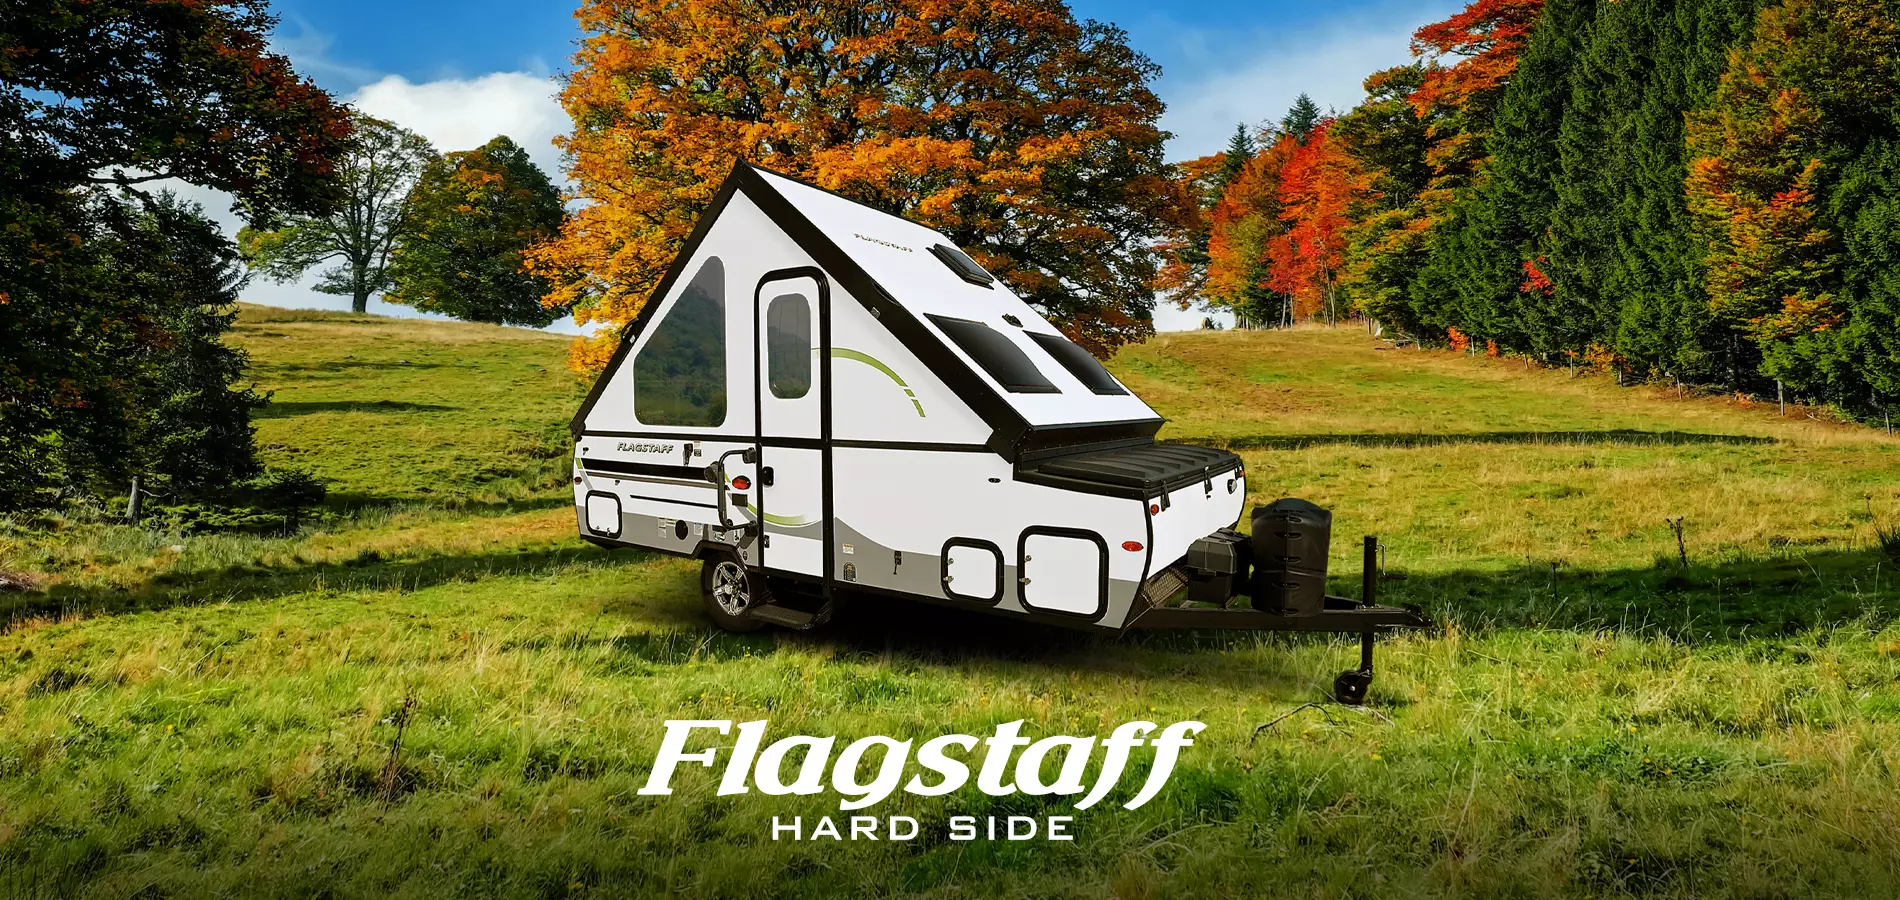 Flagstaff Hard Side Pop-Up Campers RVs